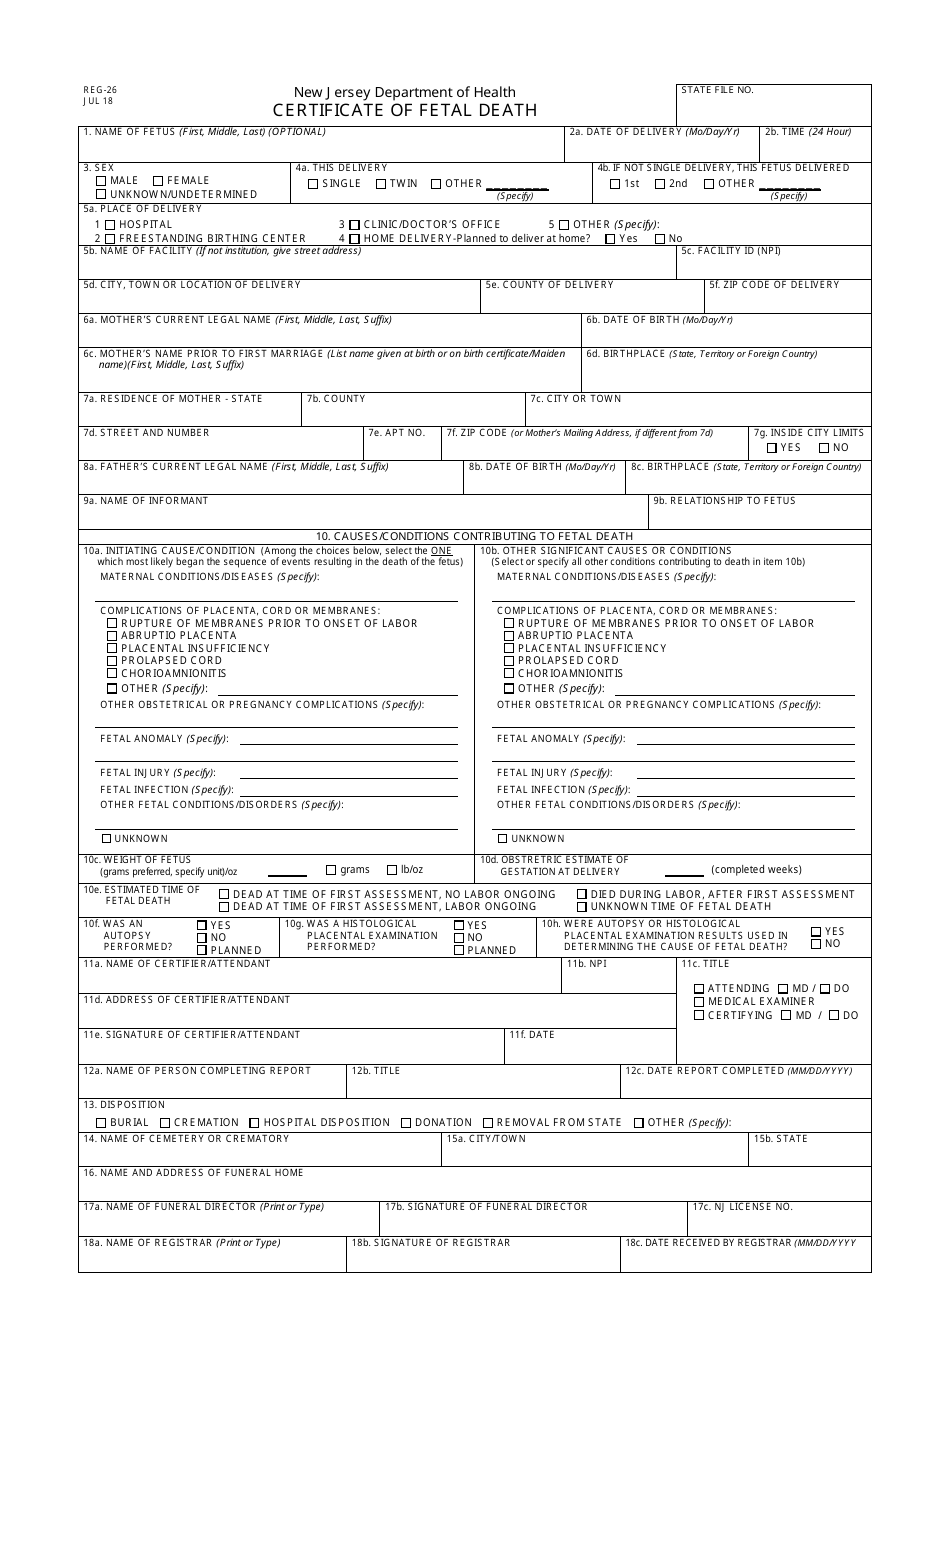 Form REG-26 Certificate of Fetal Death - New Jersey, Page 1